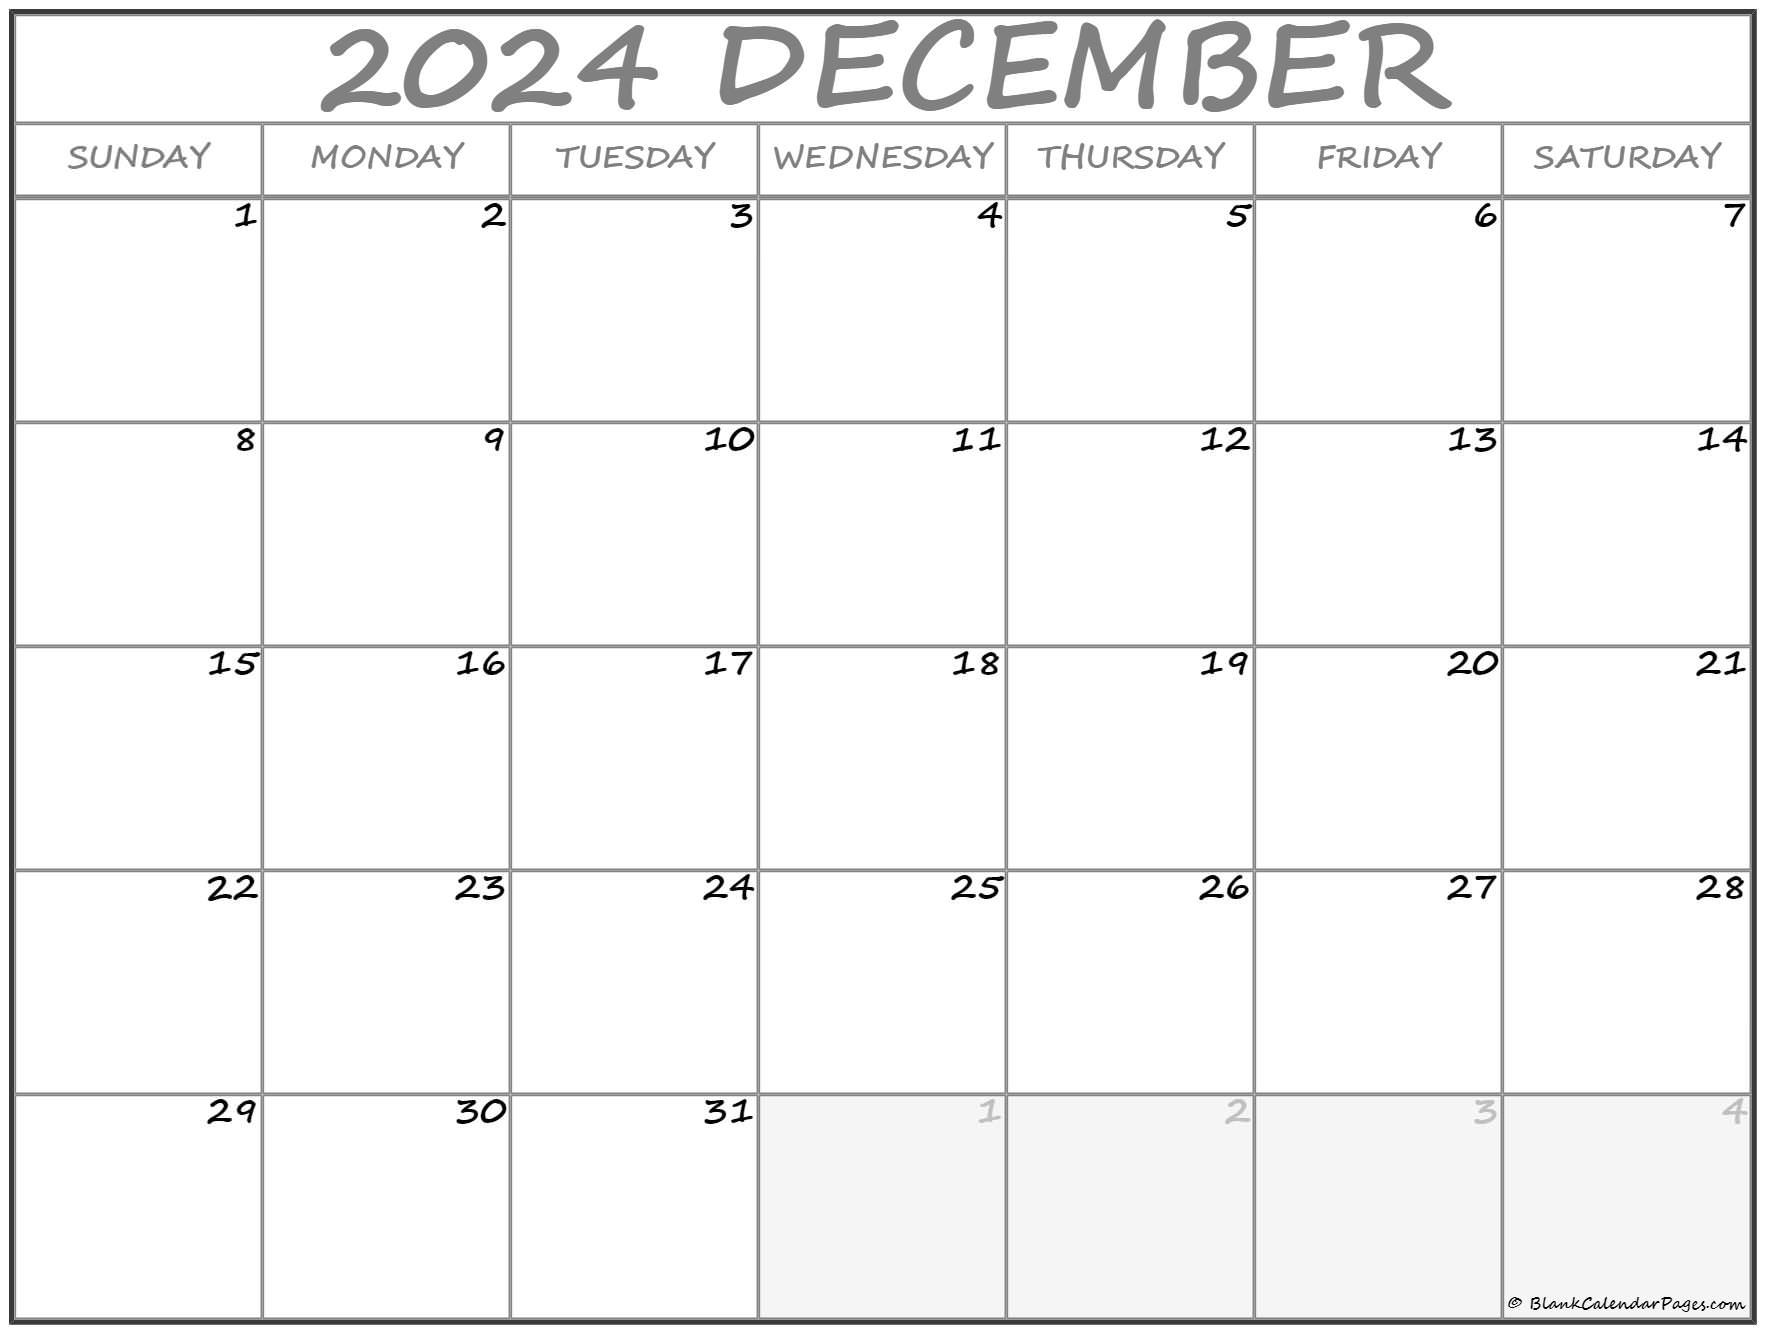 December 2021 calendar | free printable monthly calendars